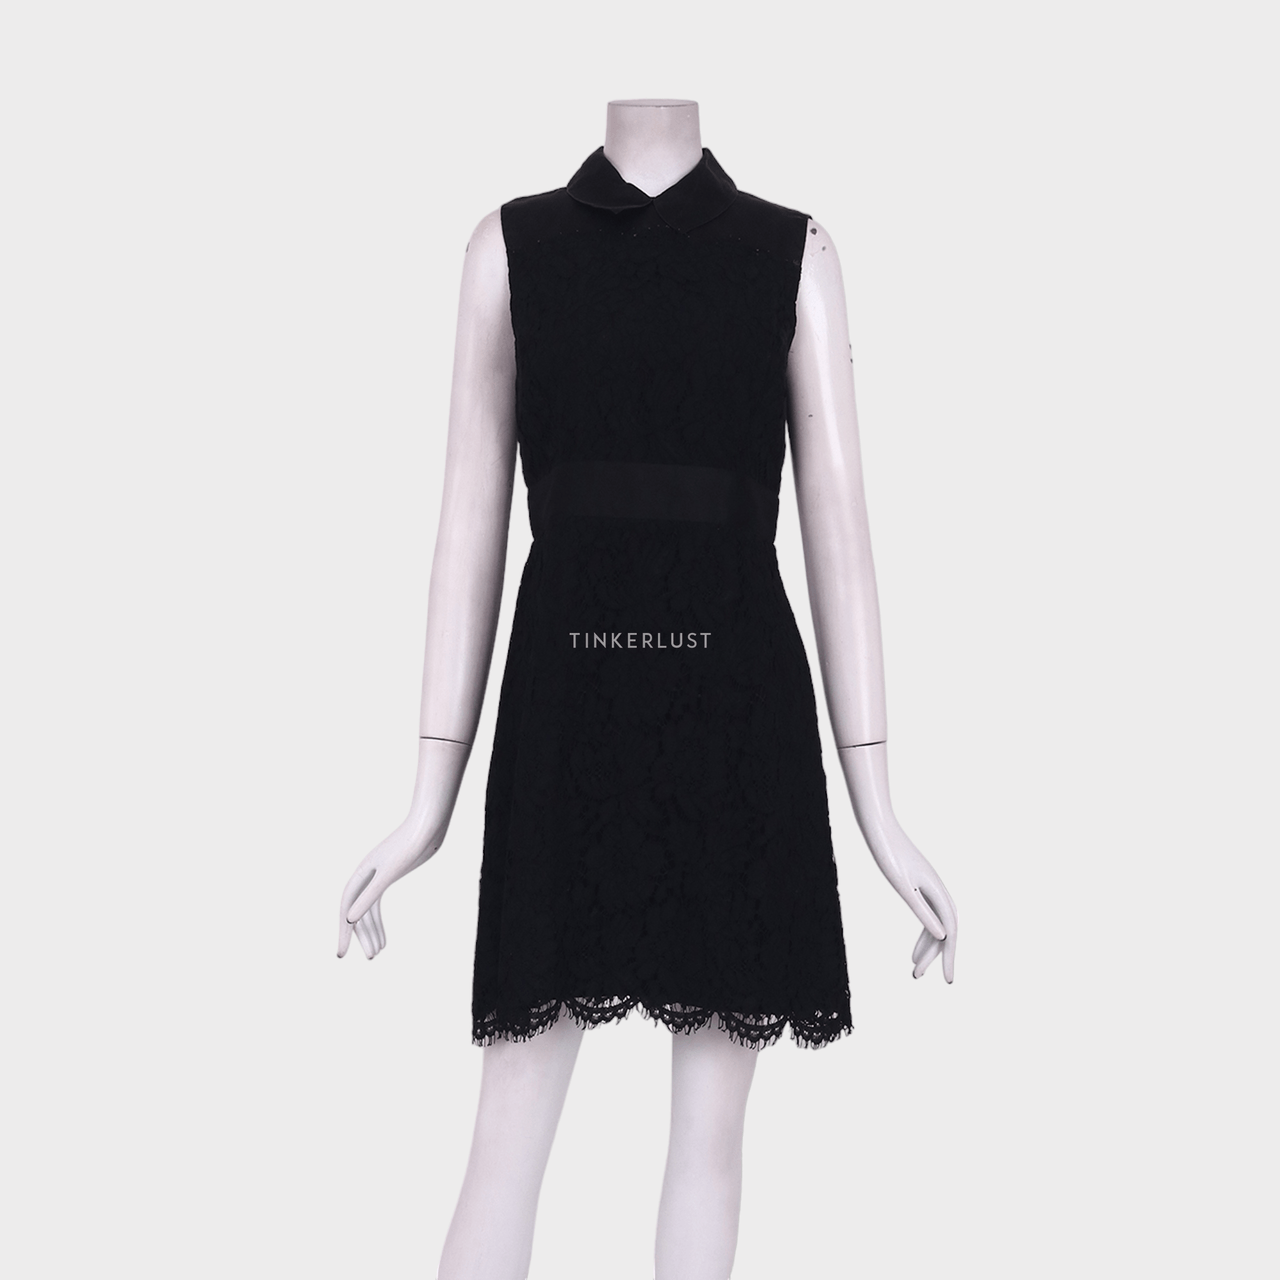 Kate Spade New York Black Lace A Line Dress